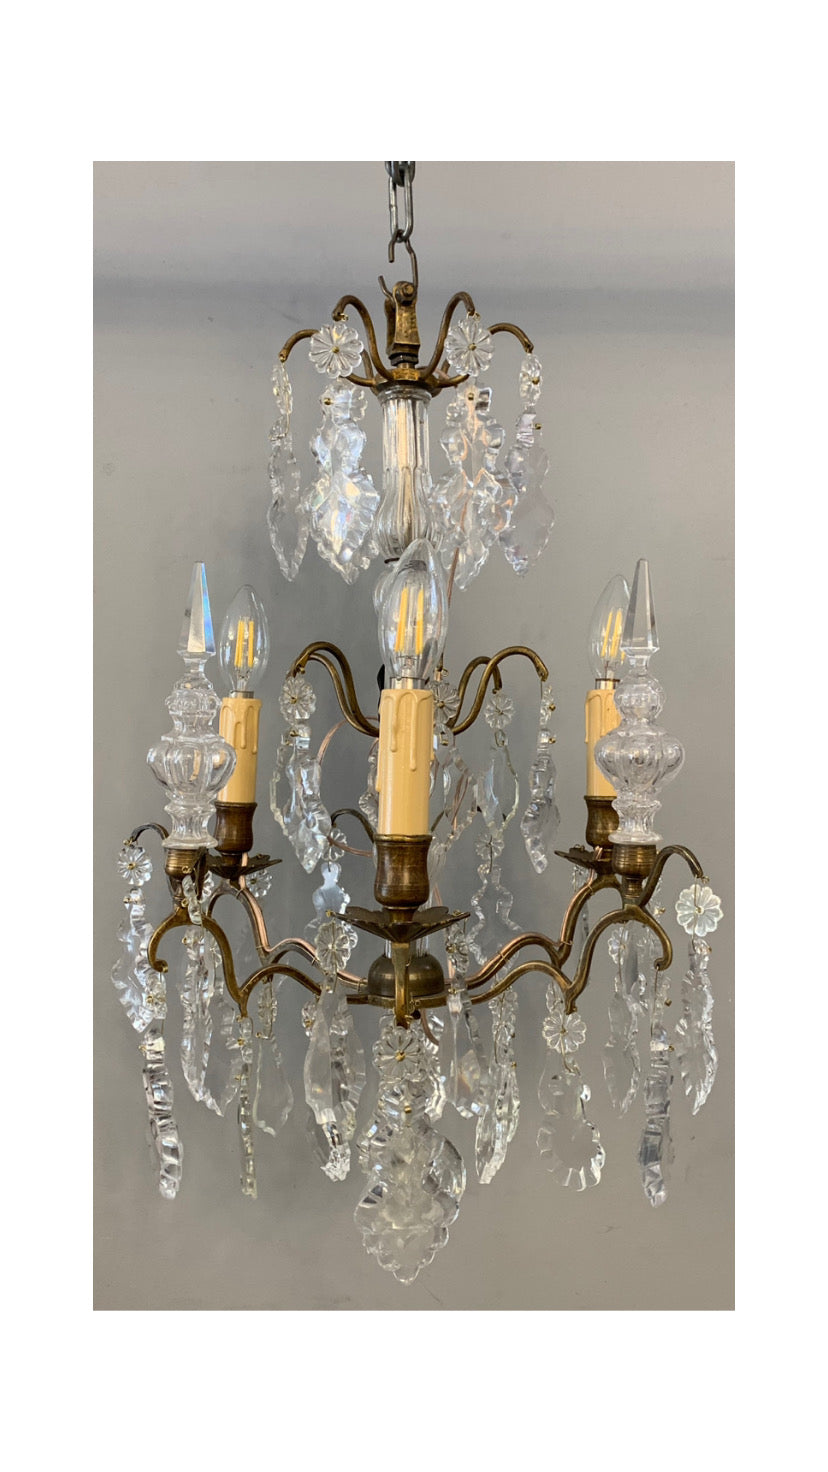 Lámpara de cristal francesa estilo Luis XVI SXIX